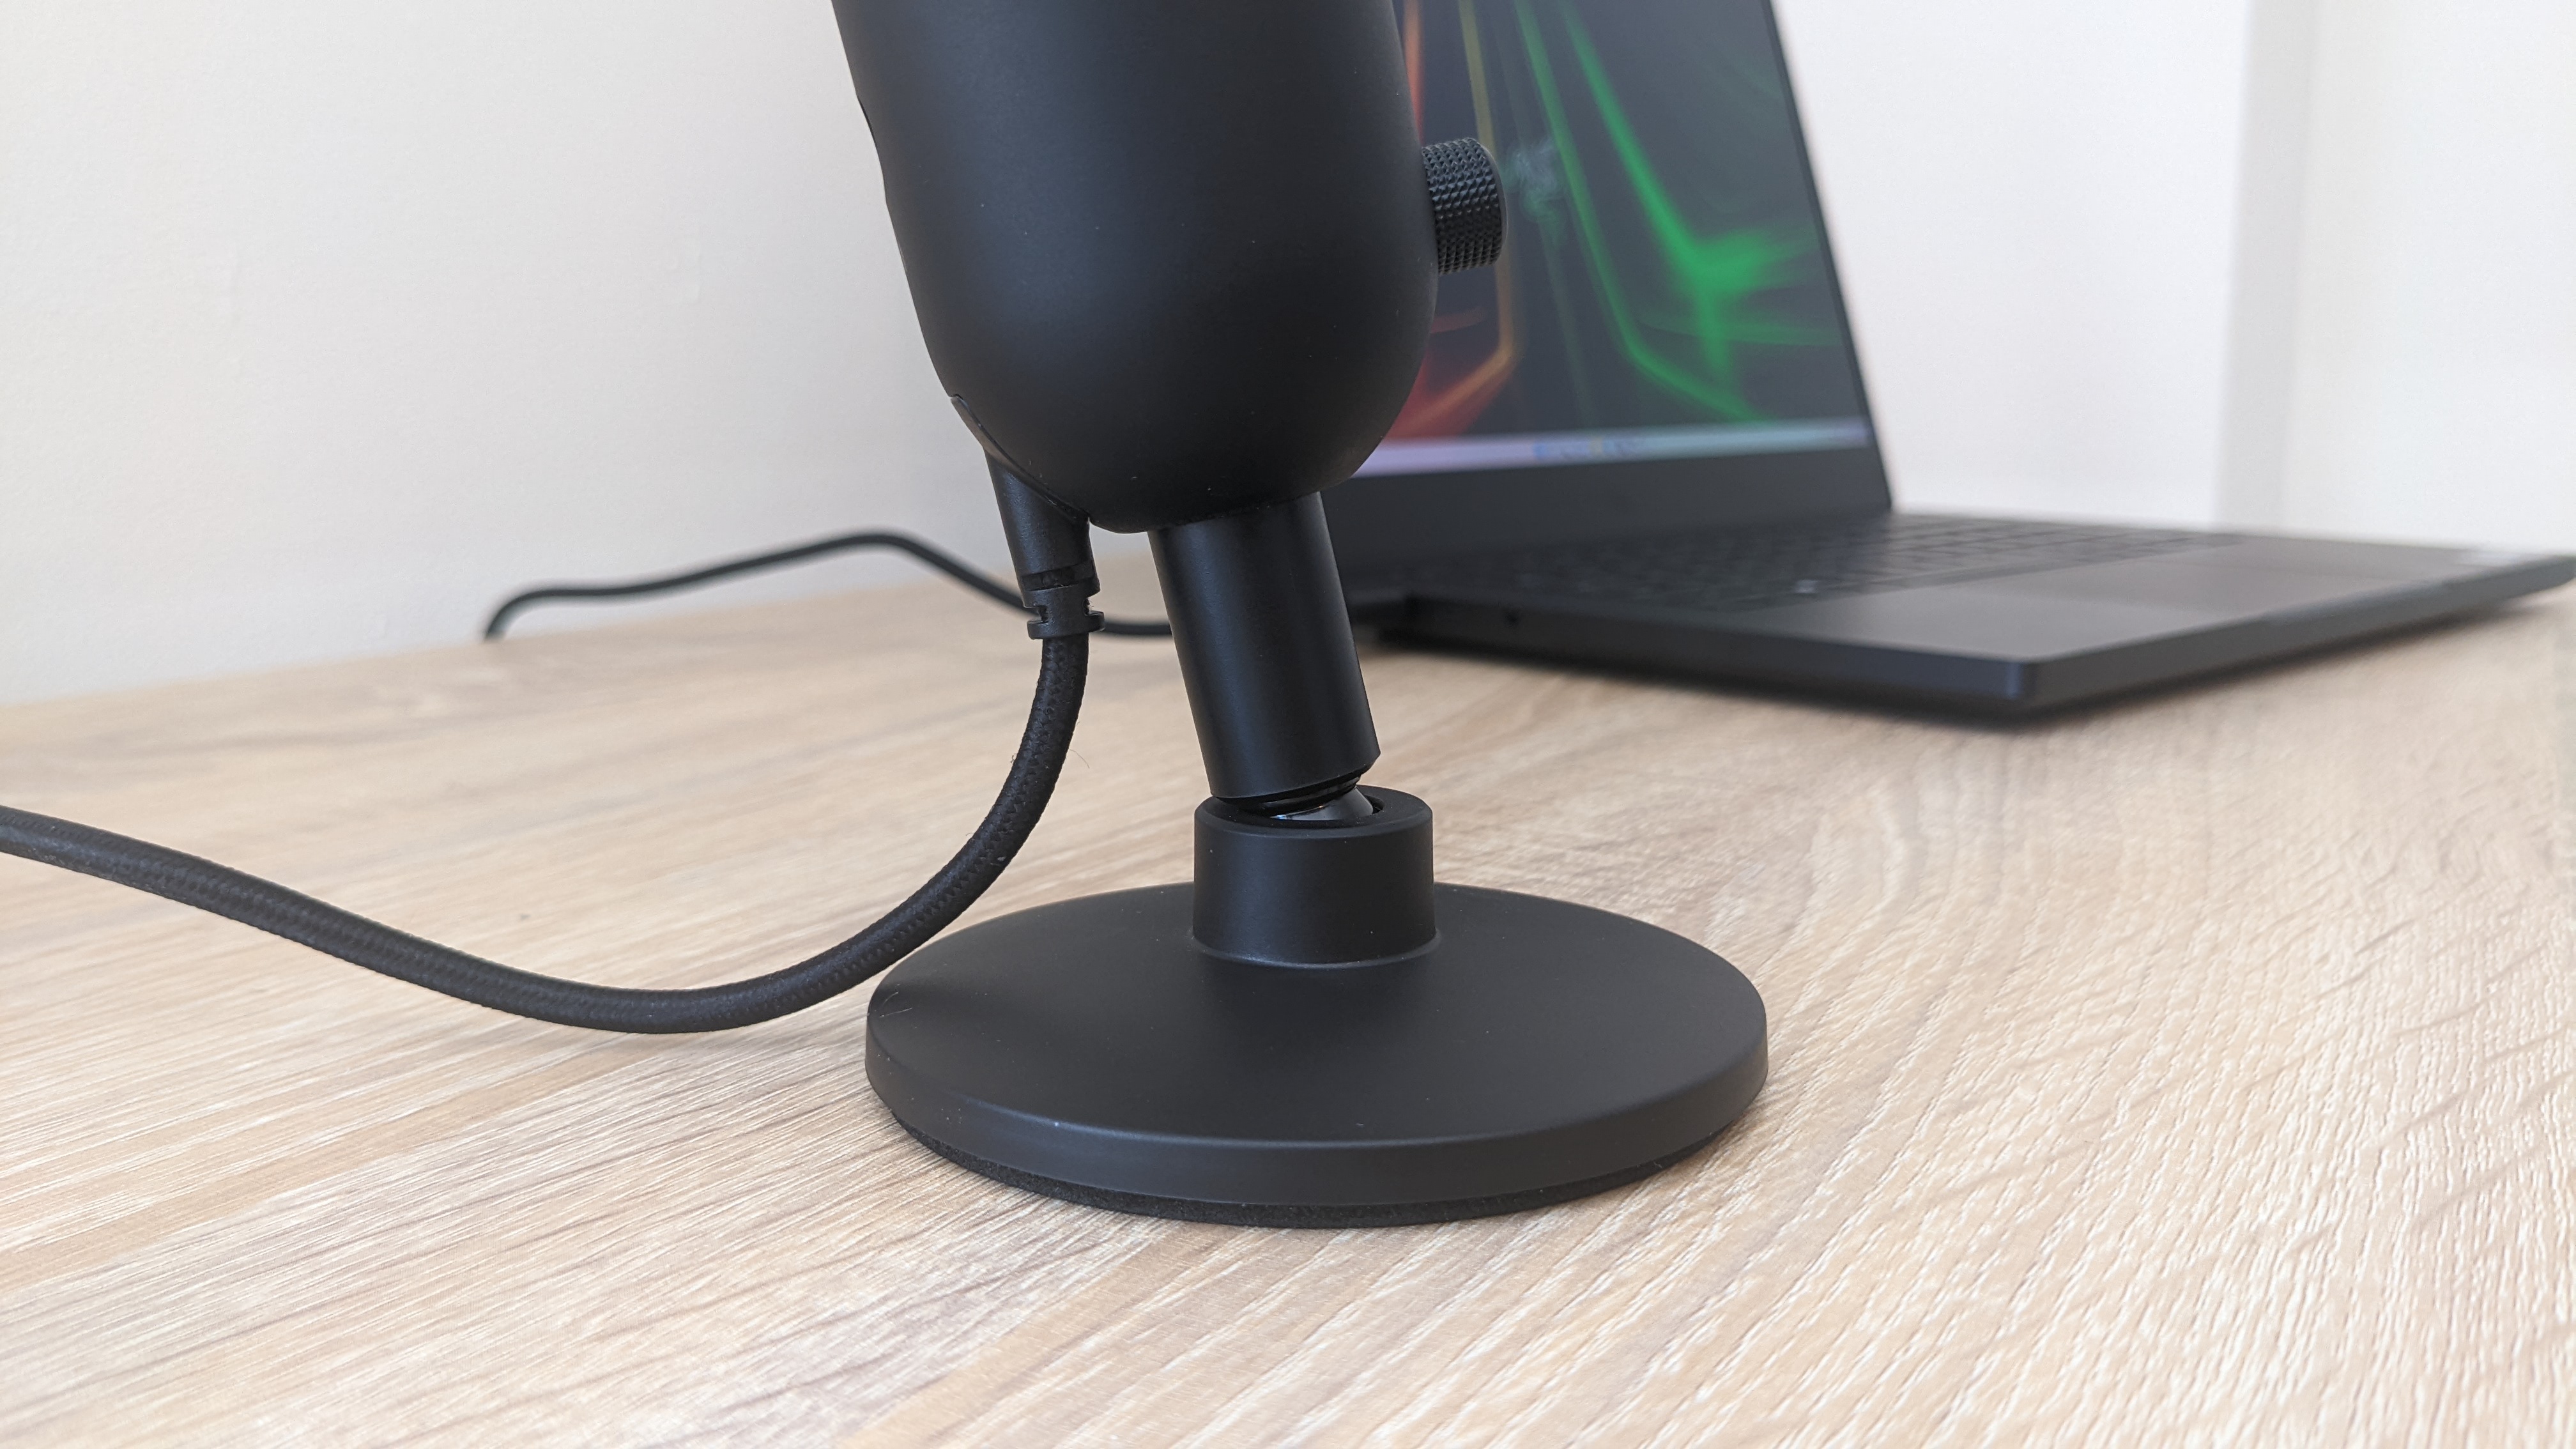 Razer Seiren V2 X USB microphone on a wooden desk, plugged into a Razer Blade 14 laptop.